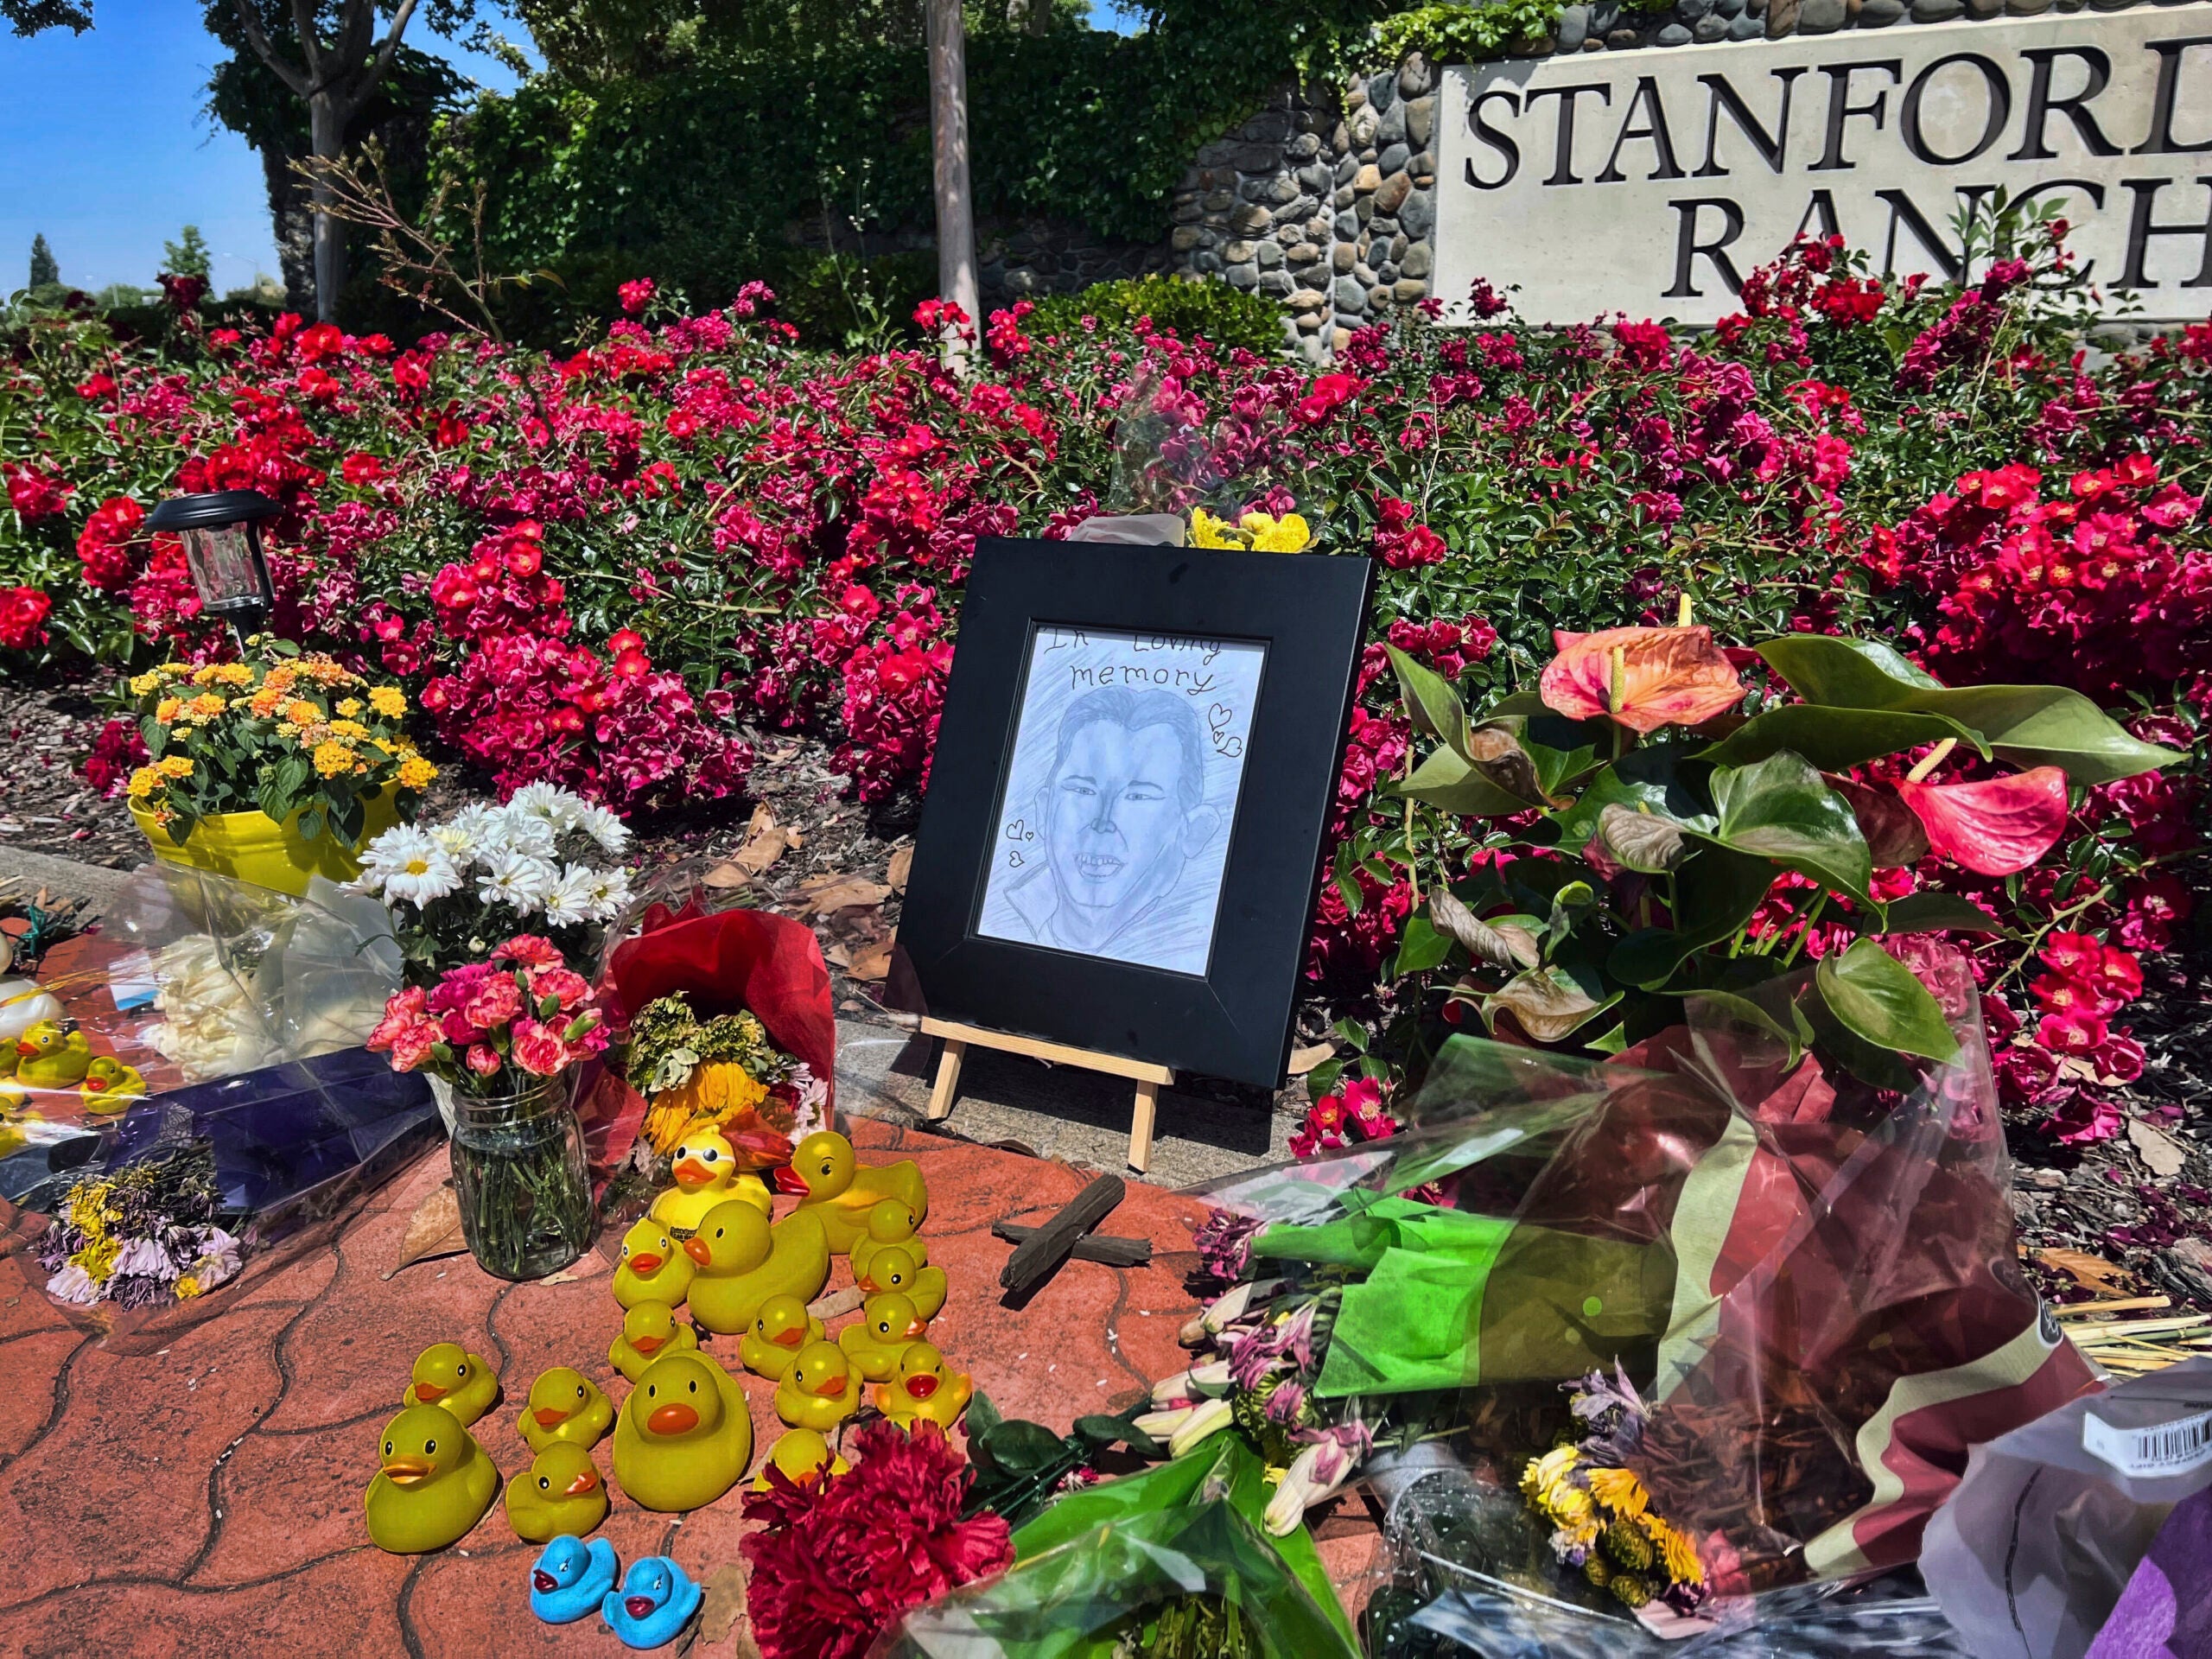 A memorial near the Stanford Ranch Plaza in Rocklin, California.